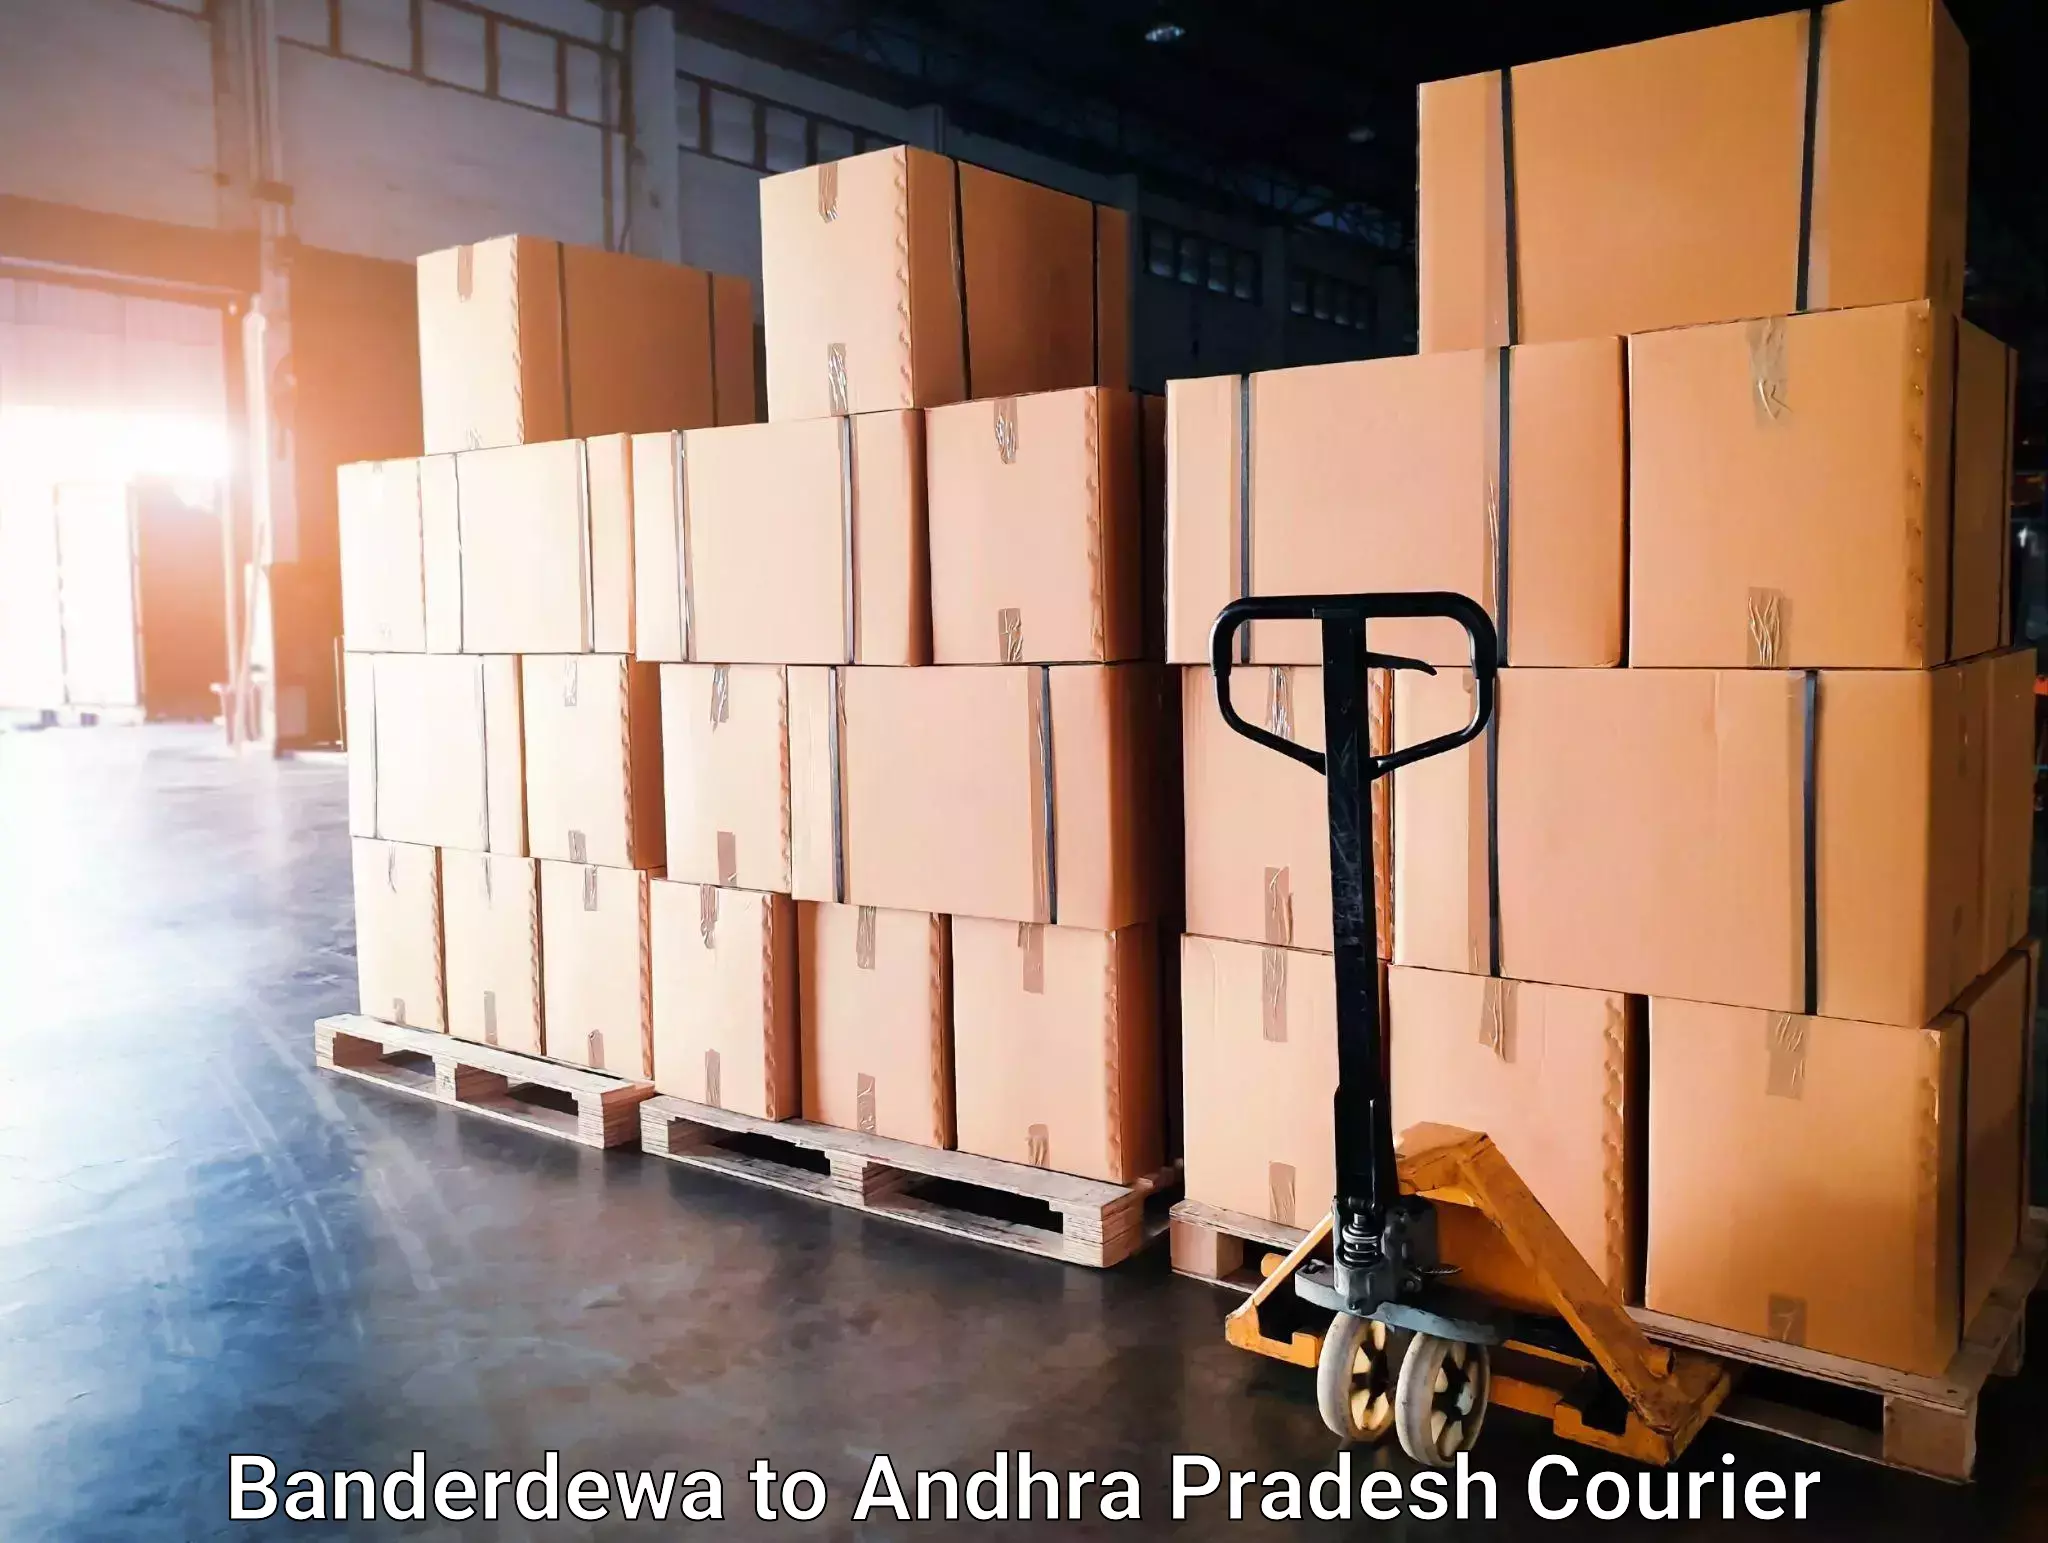 Express delivery capabilities Banderdewa to Bhimadole